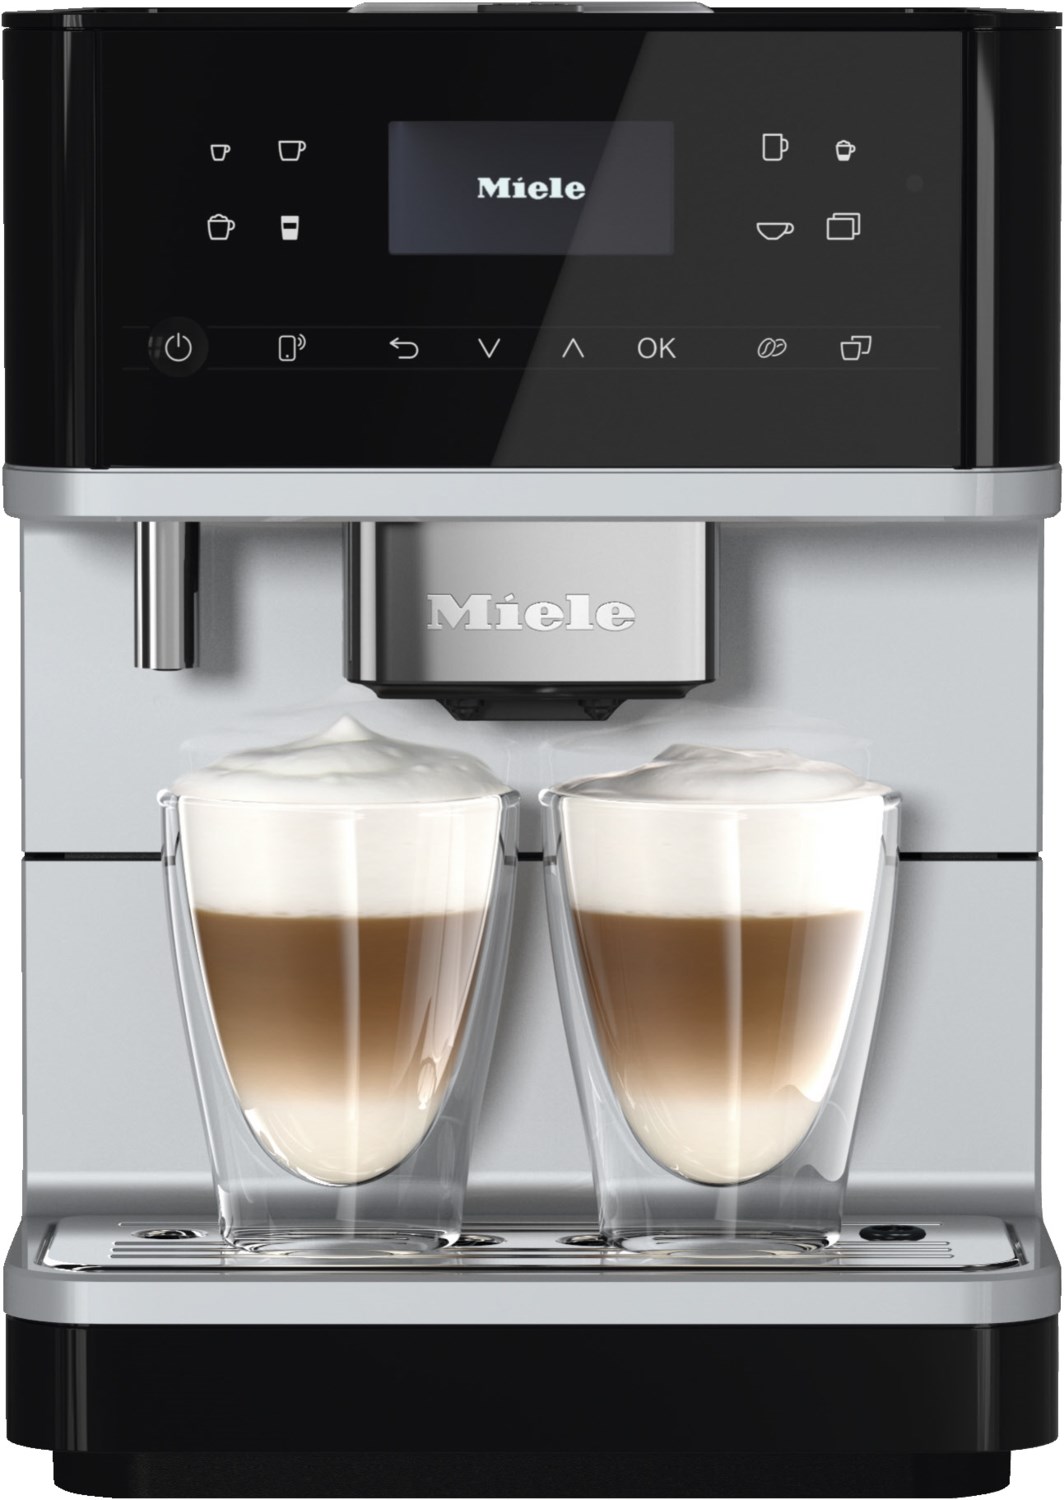 CM 6160 Silver Edition Kaffee-Vollautomat alusilber/metallic